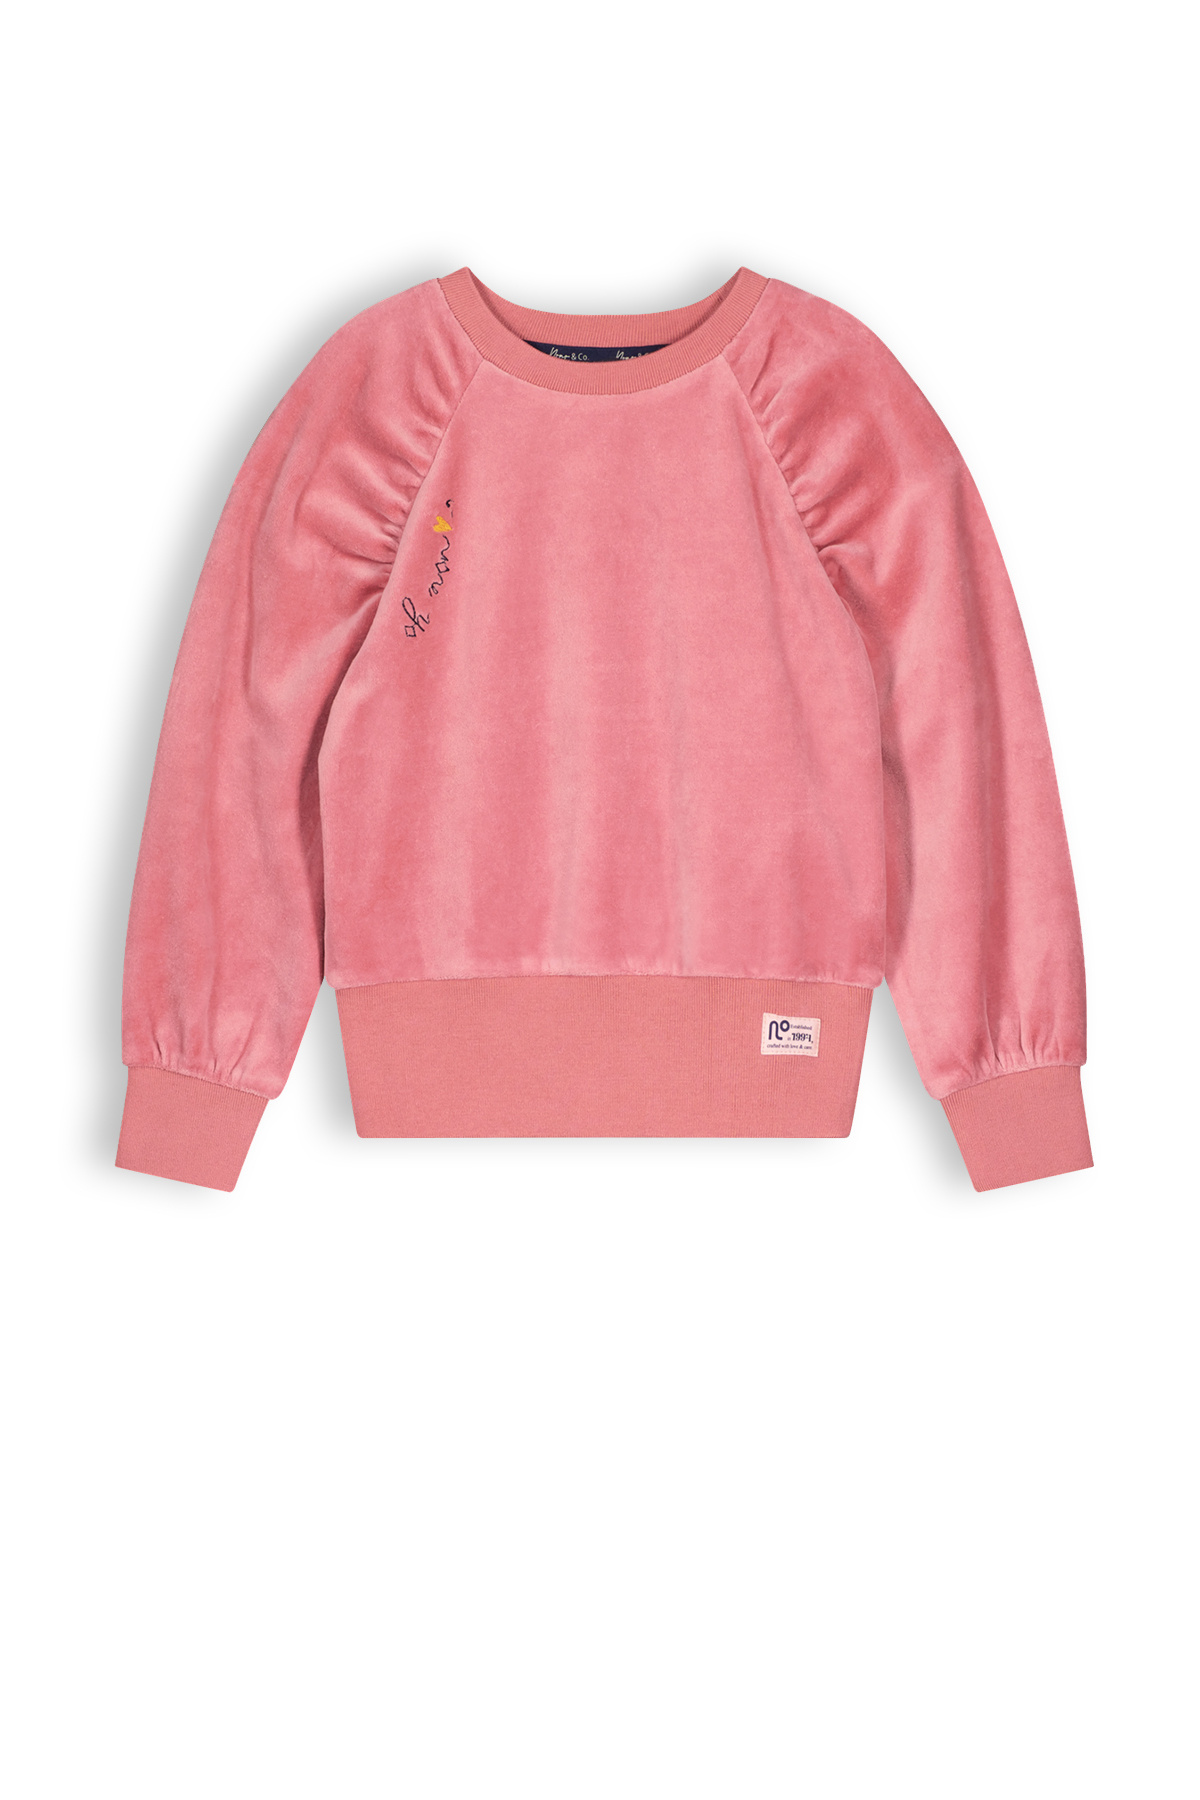 NONO - Sweater - Sunset Pink - Maat 122-128